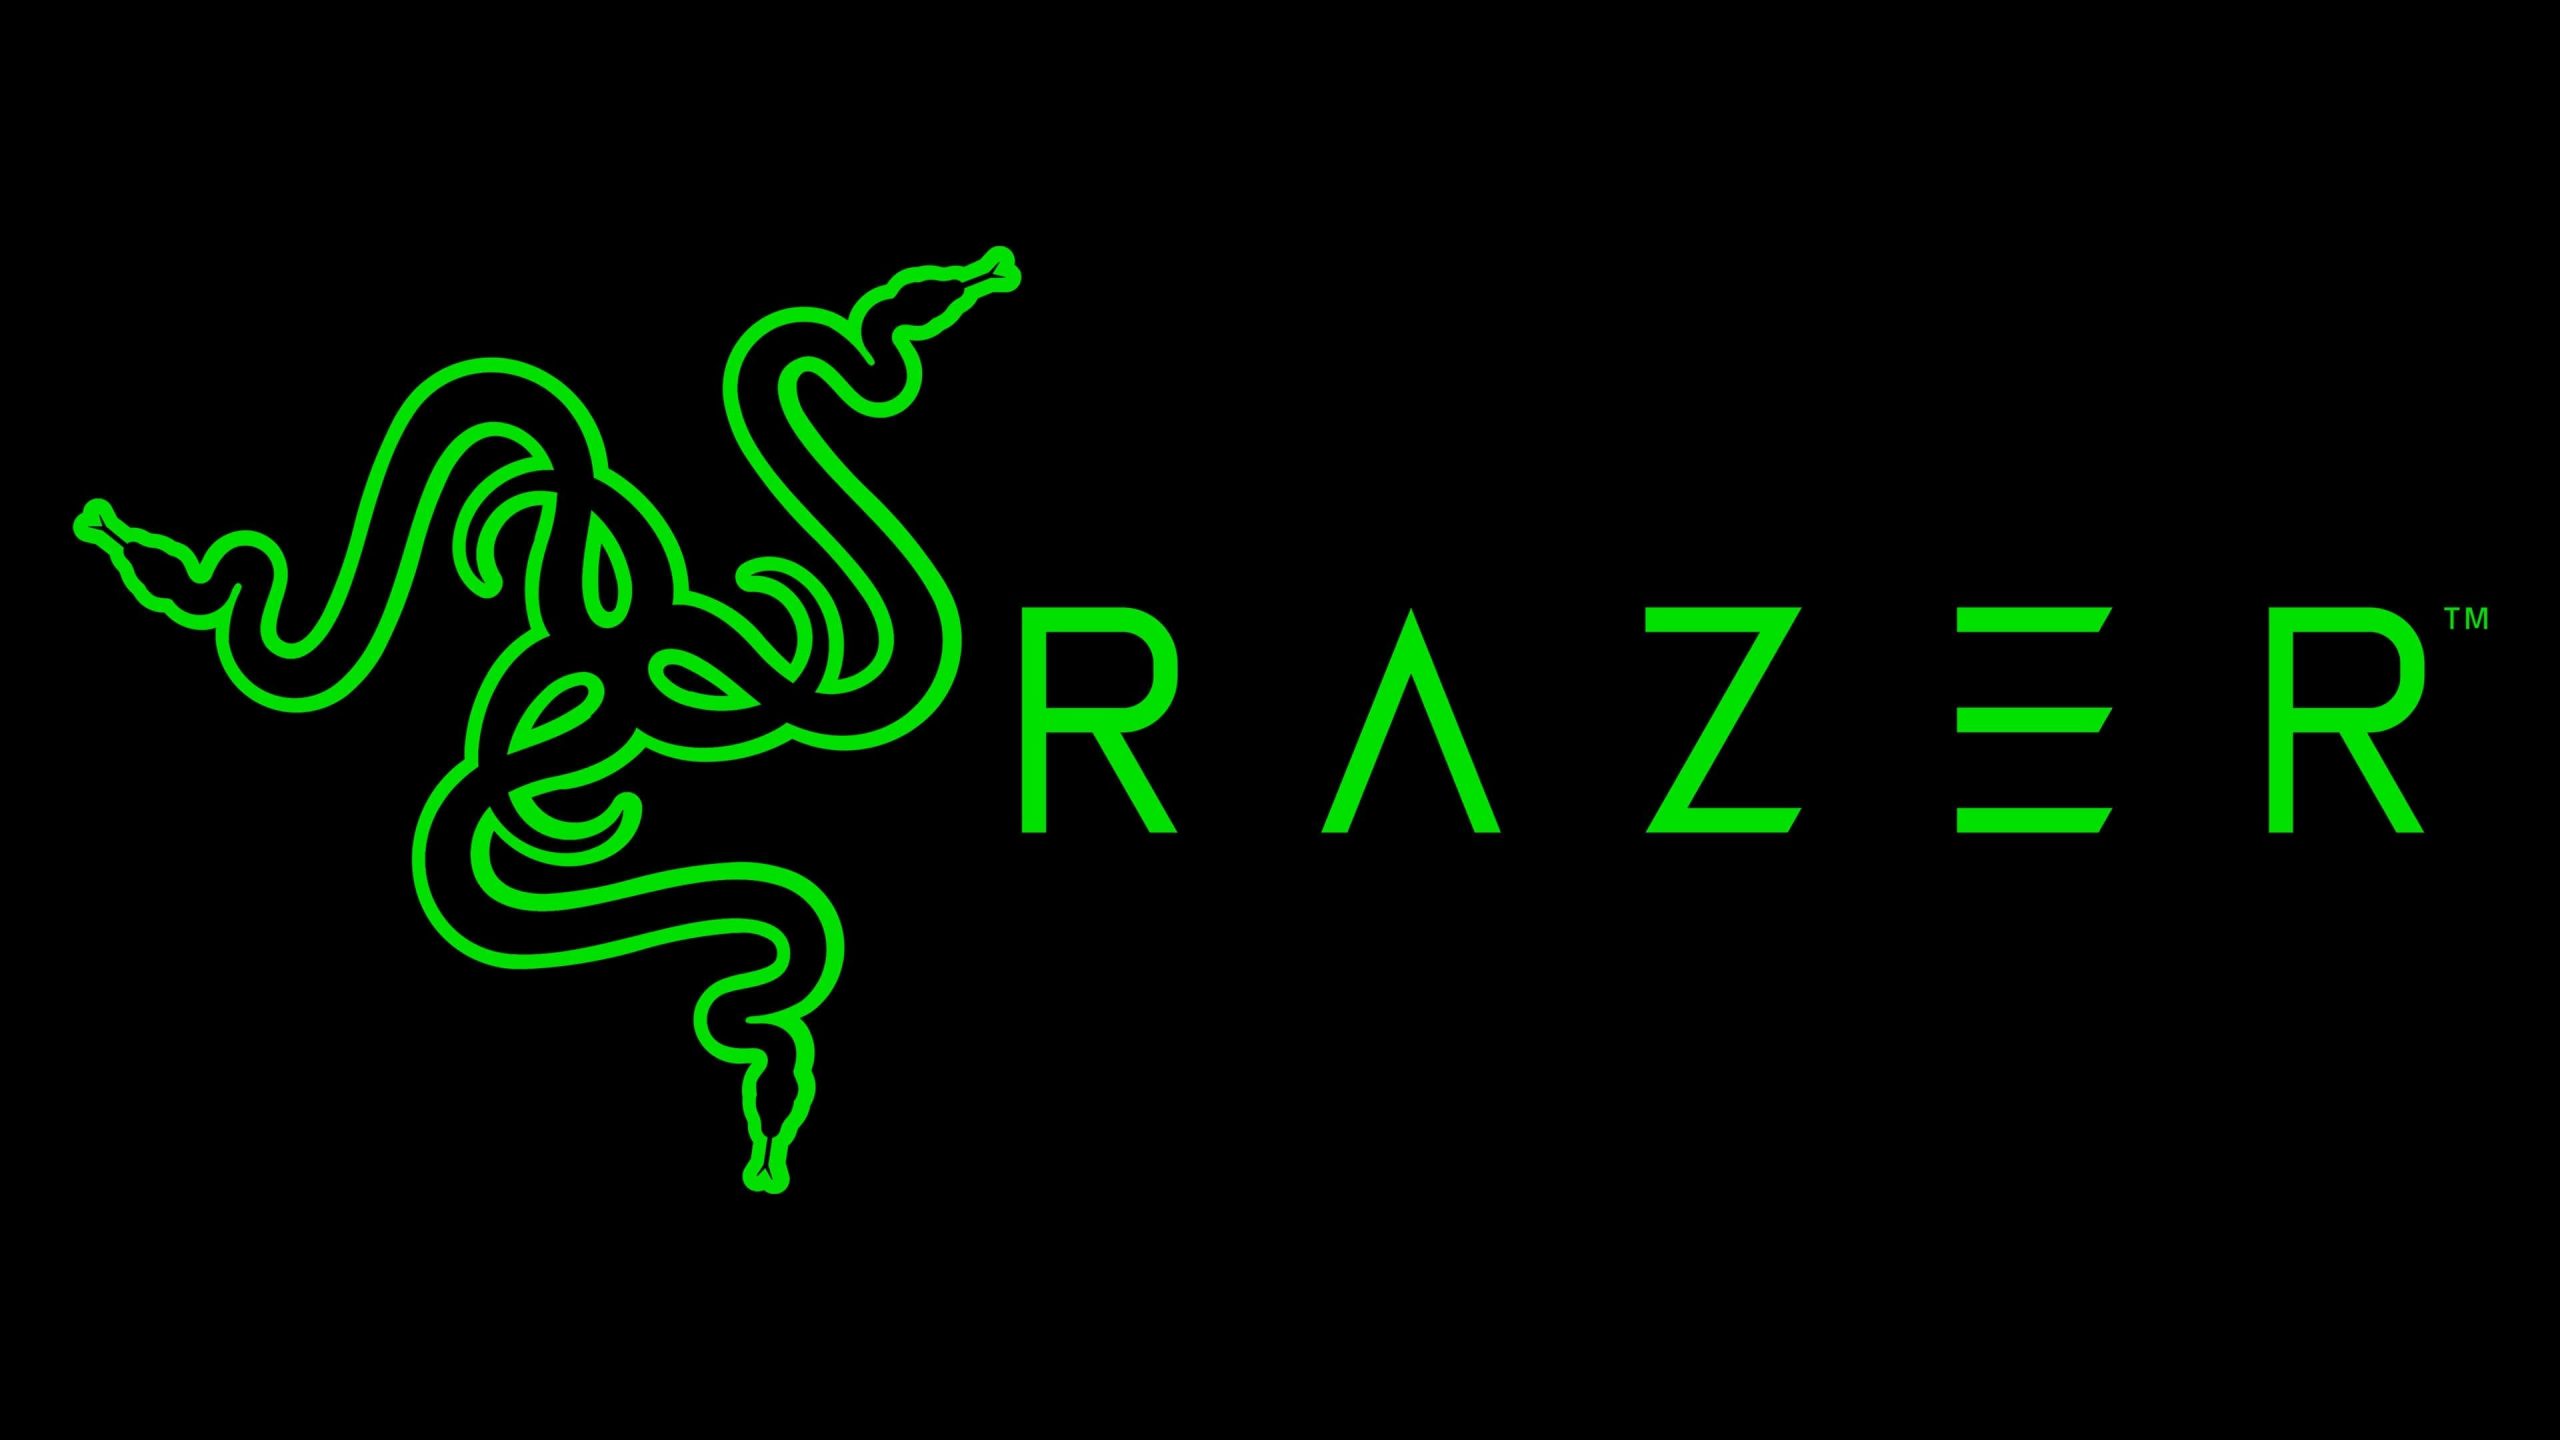 Logo de Razer